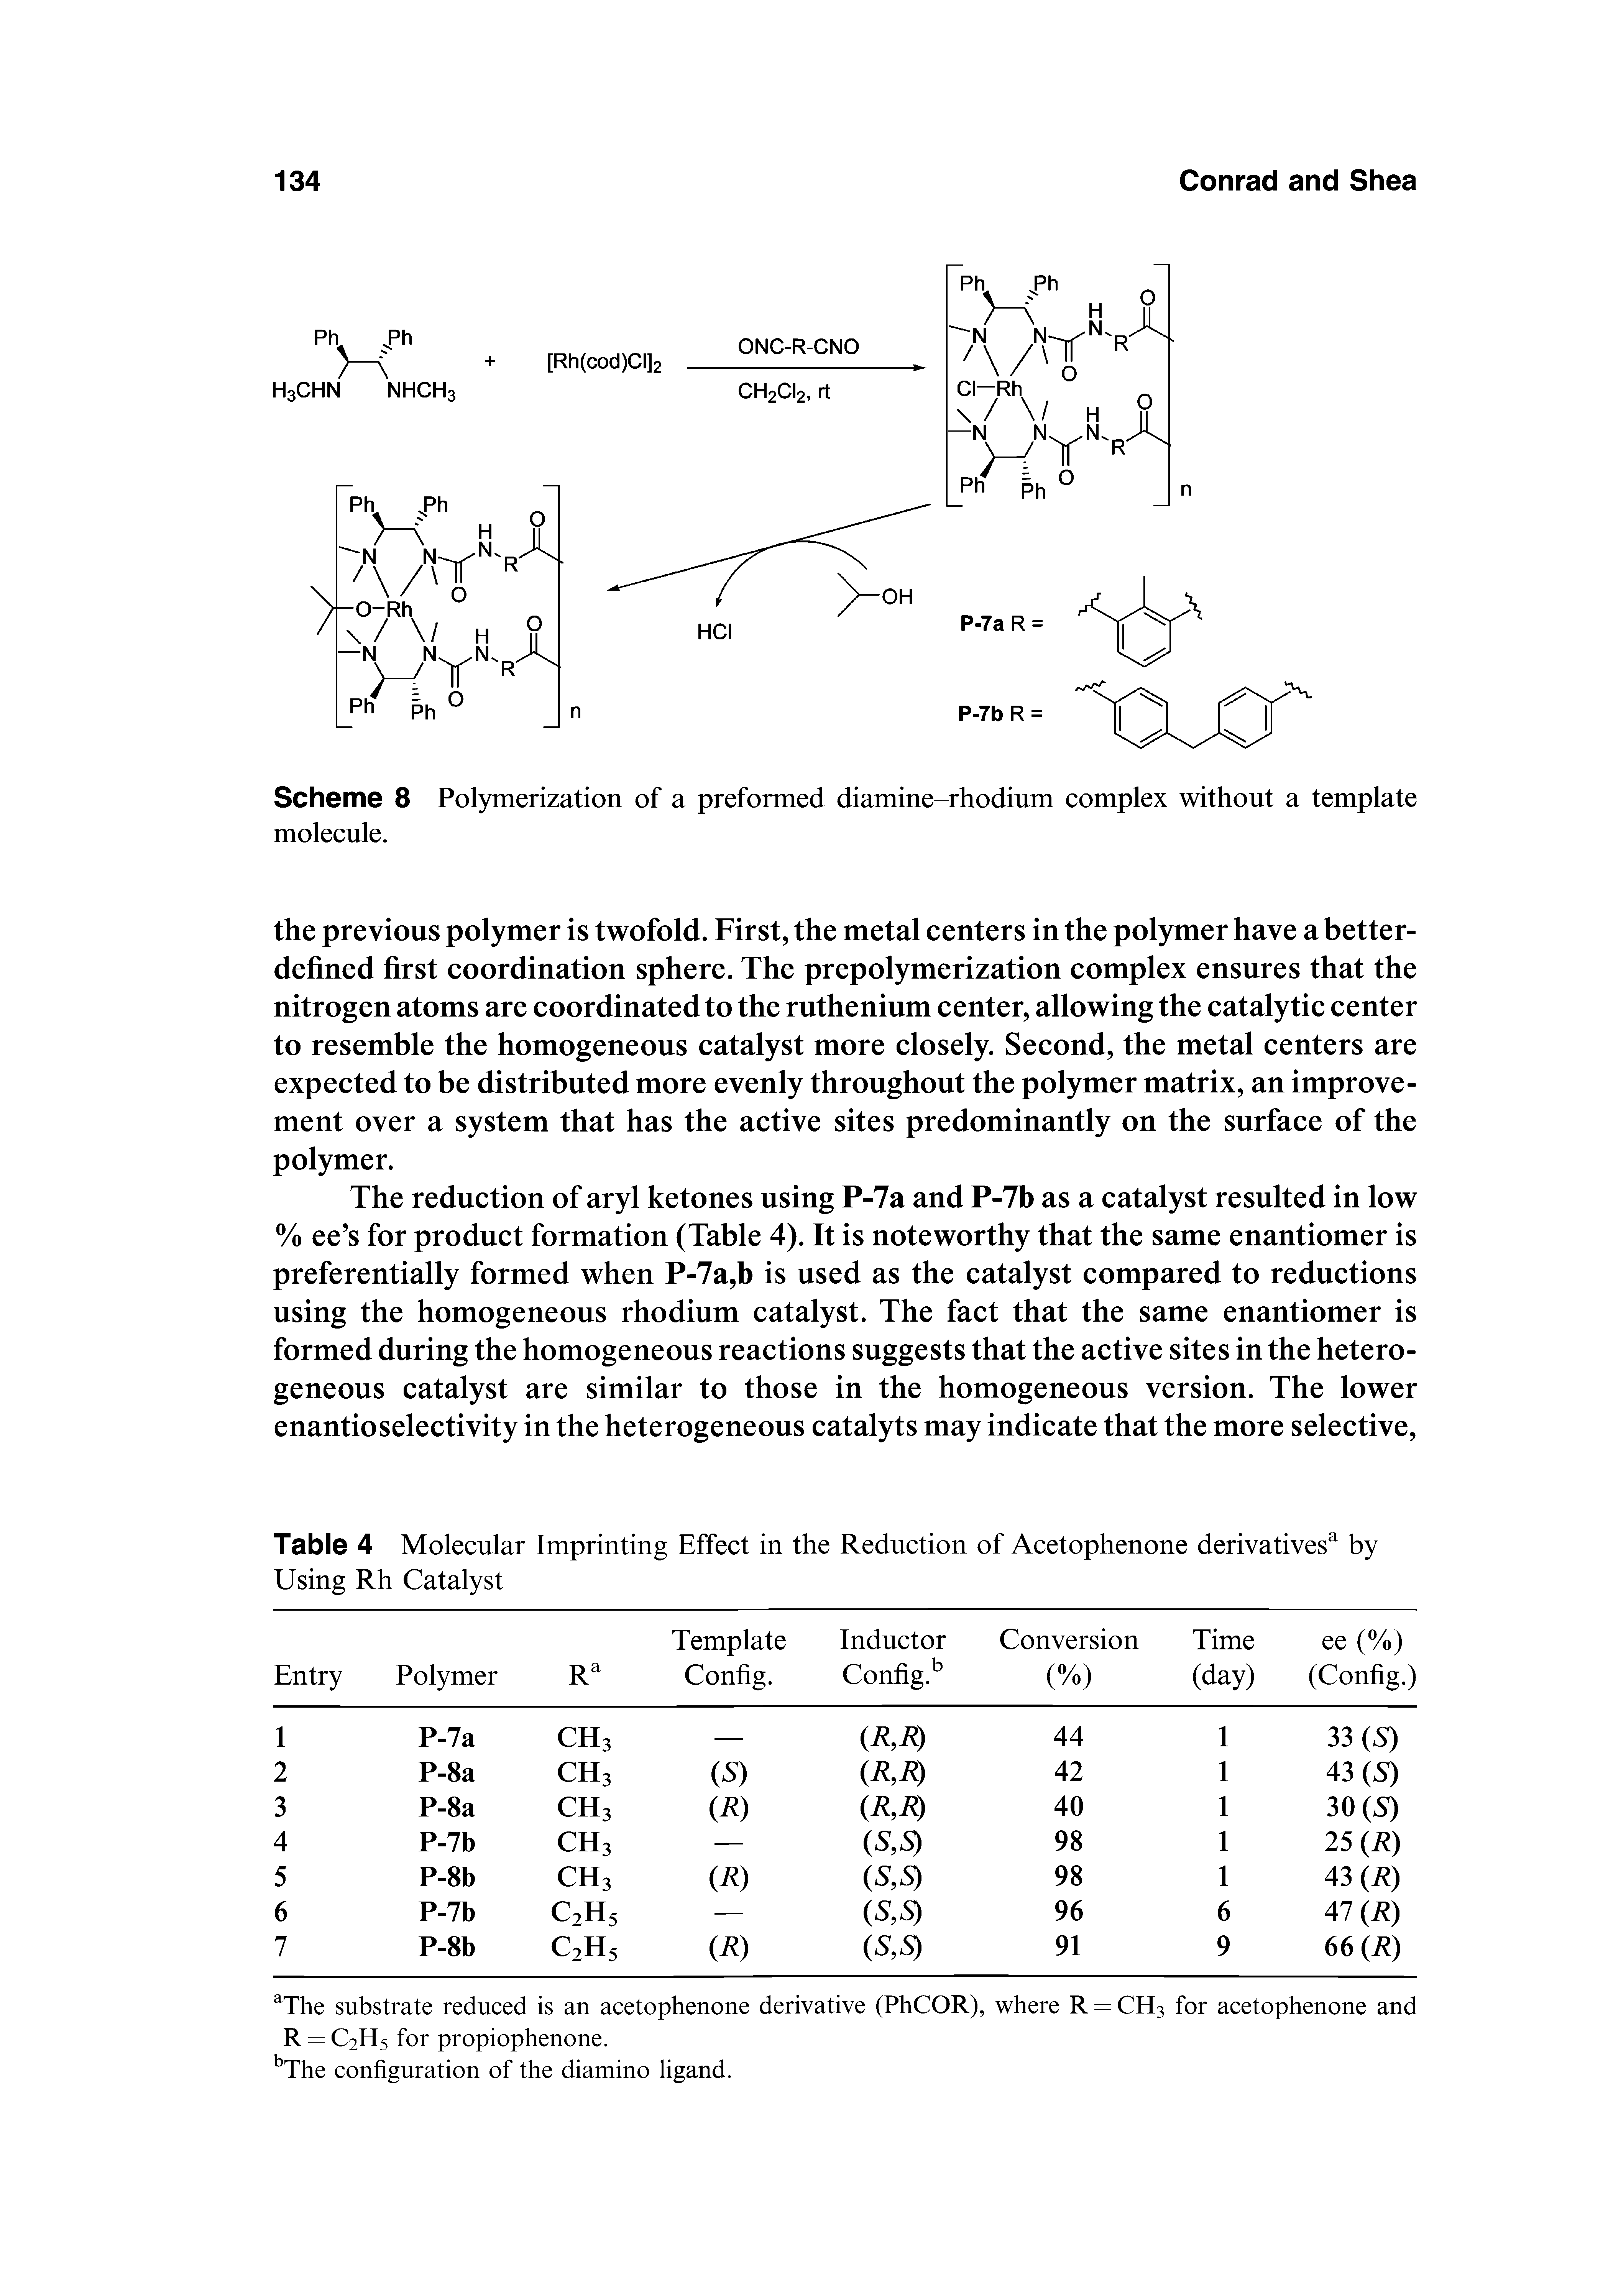 Scheme 8 Polymerization of a preformed diamine-rhodium complex without a template molecule.